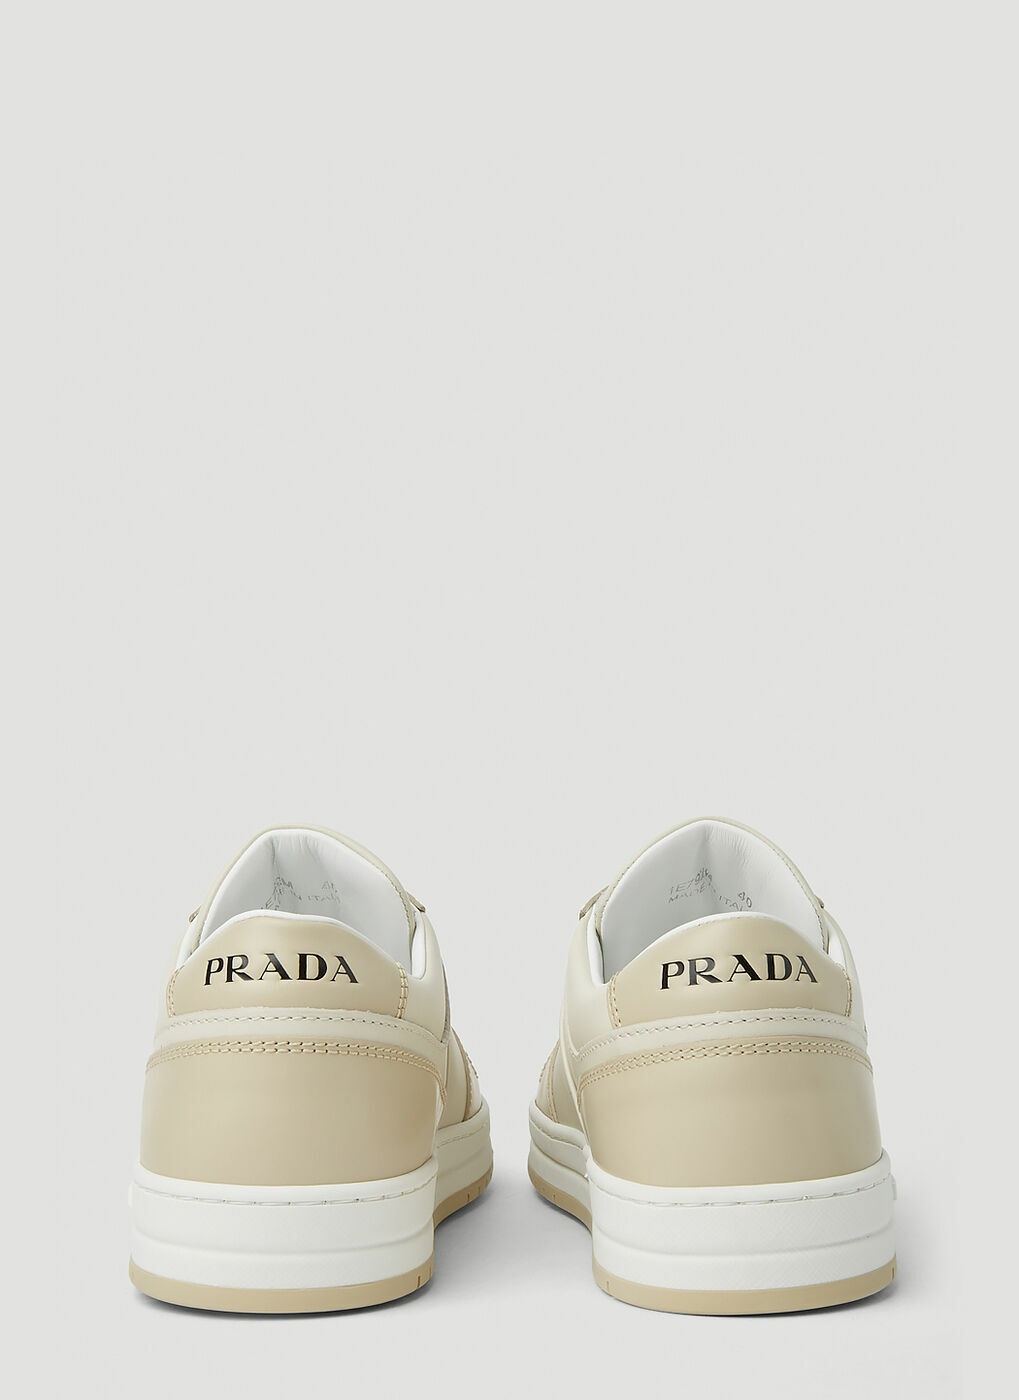 Luxury Sneakers for Women | PRADA